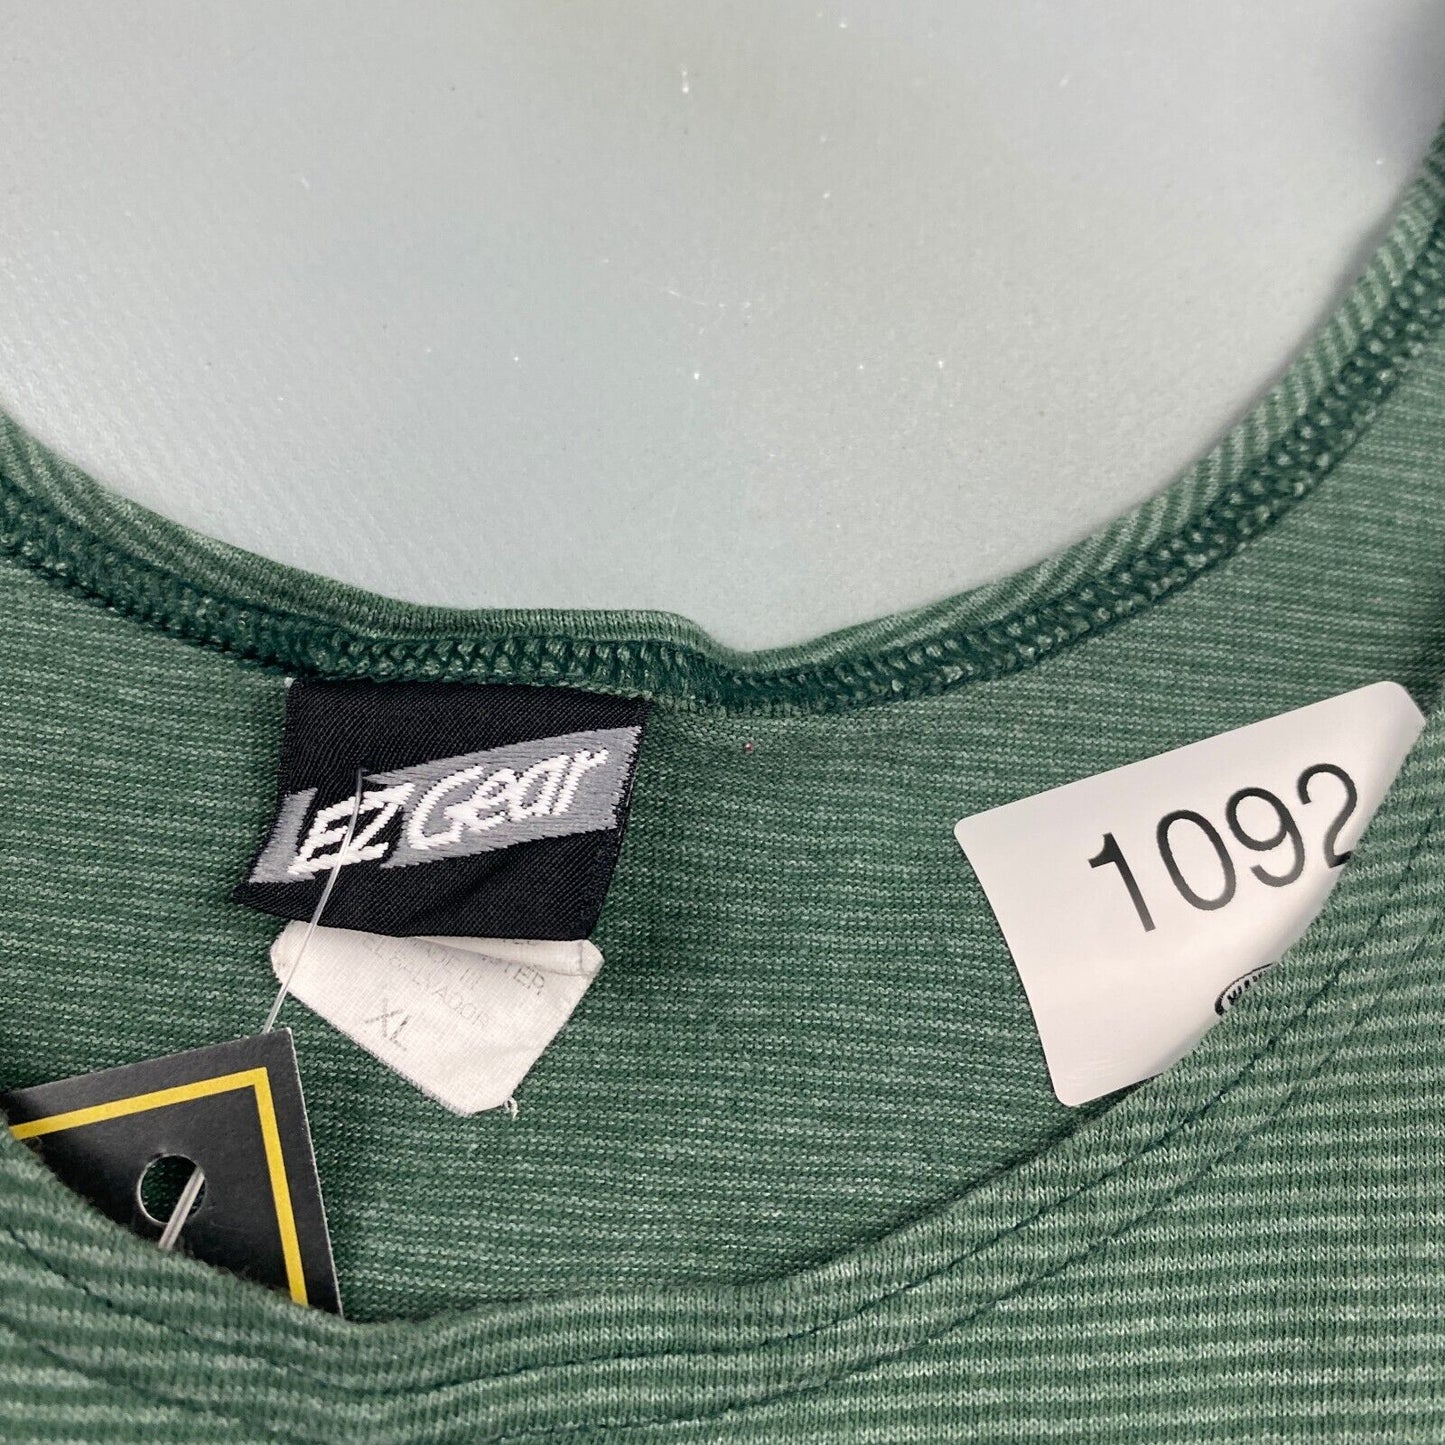 VINTAGE 90s EZ Gear Green Striped Sleeveless Tank T-Shirt sz XL Men Adult